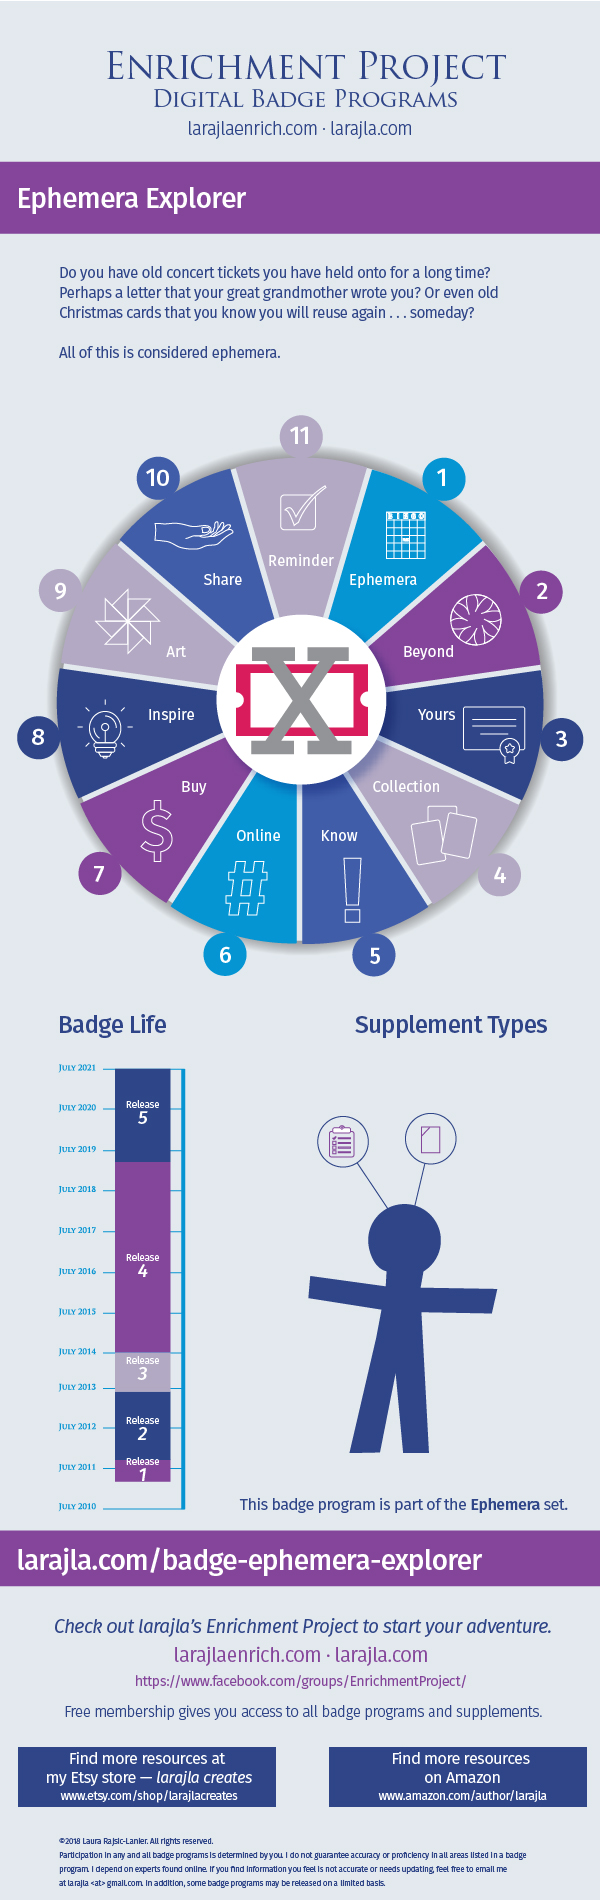 Infographic: Ephemera Explorer Badge Program